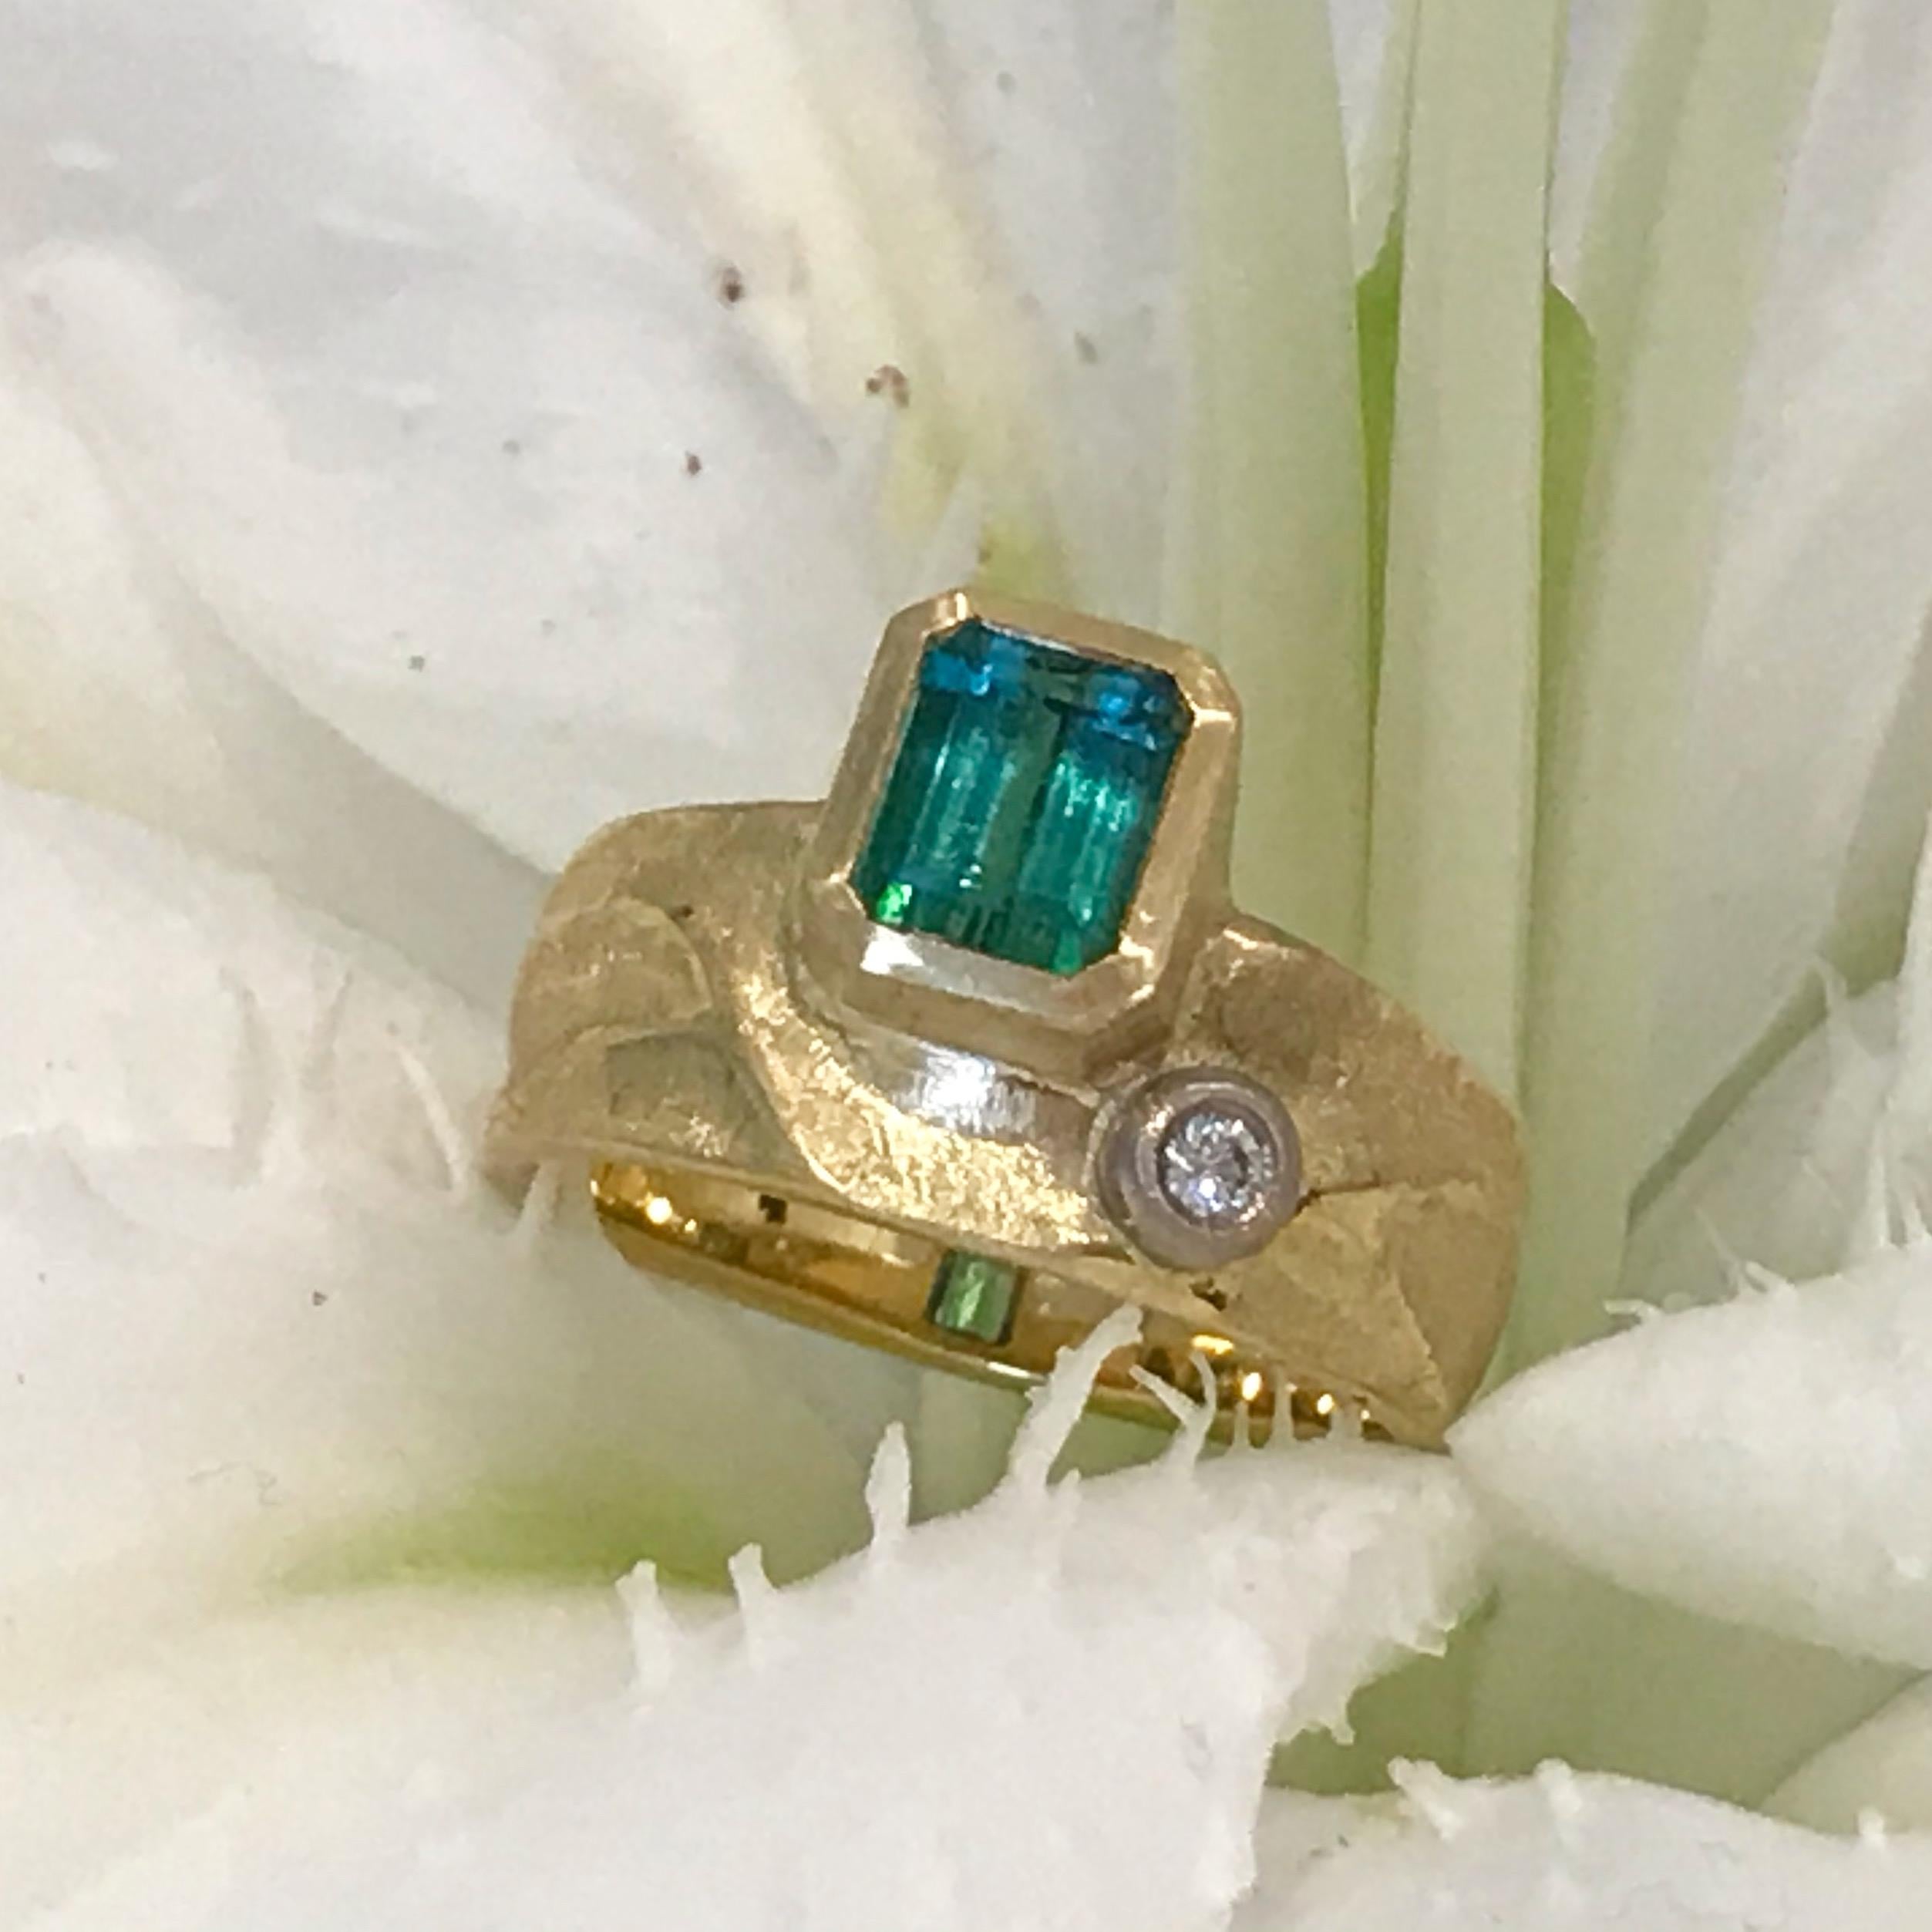 K.Mita's 1.31ct Bi-Color Green Tourmaline Geo Ring, which is handmade from 18 Karat Yellow Gold, features a blue-green Bi-Color Green Tourmaline accented with a 0.04 Carat side Diamond set in 18 Karat Palladium White Gold. The Bi-Color Green